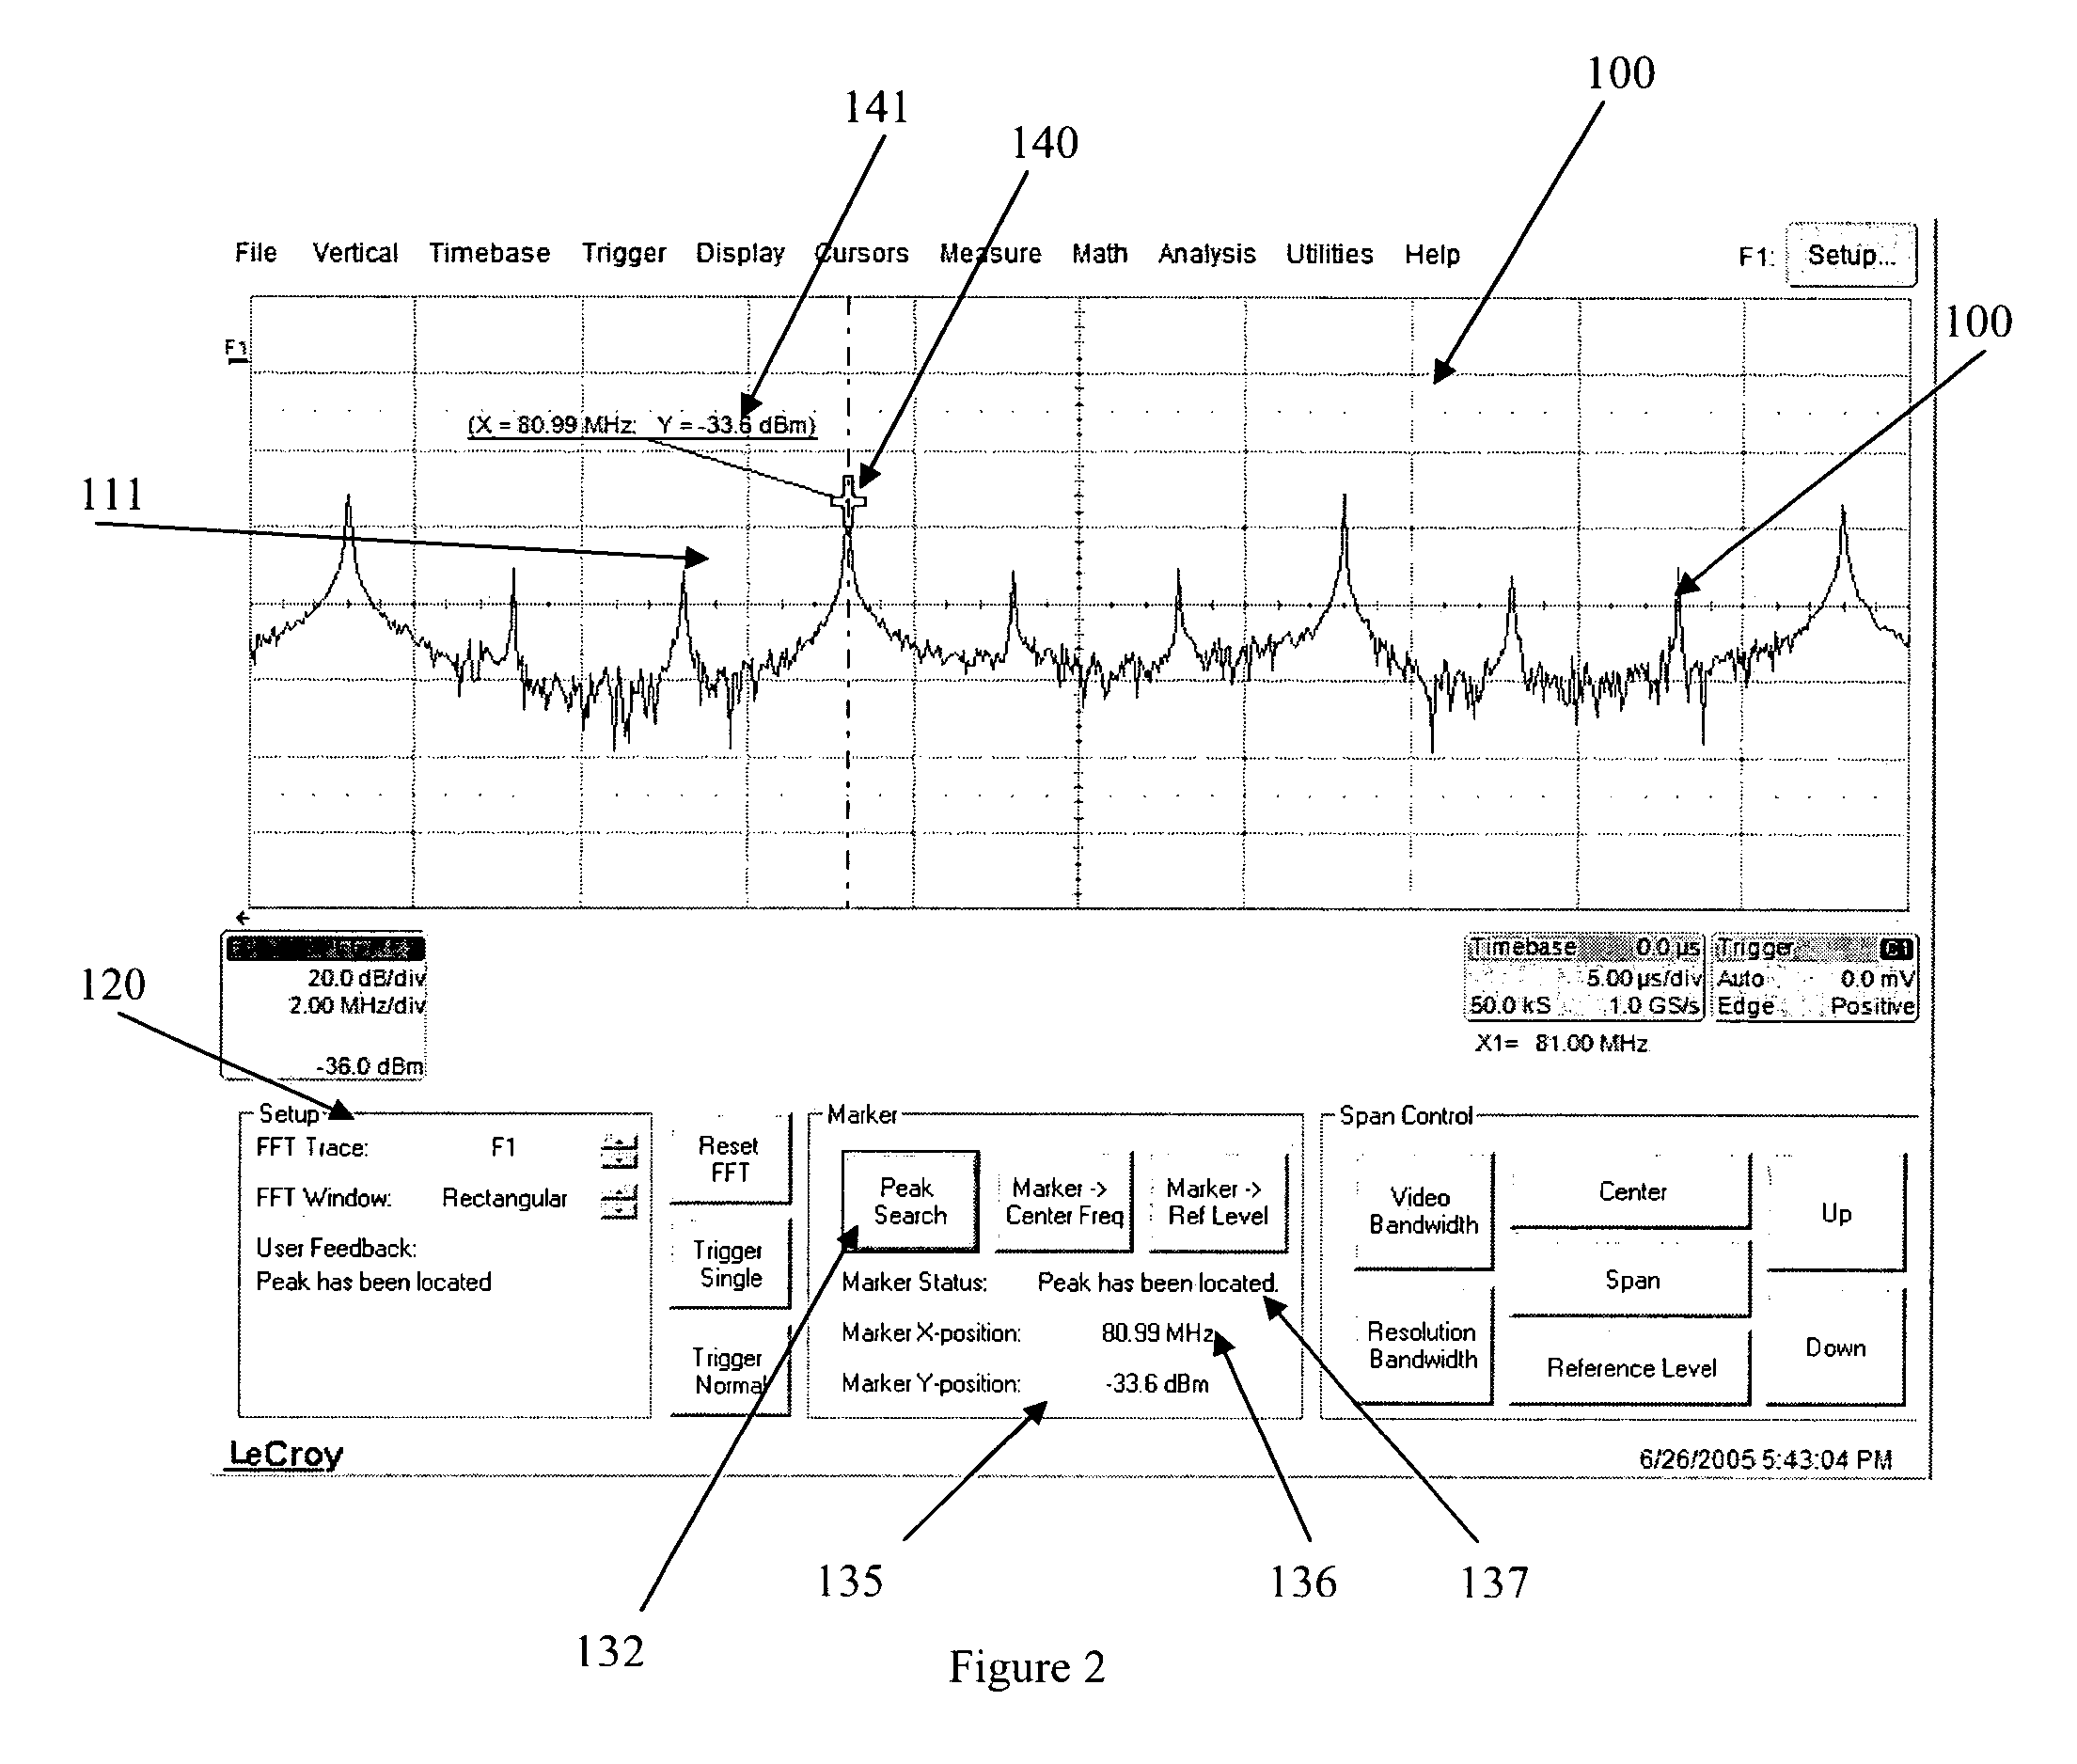 Spectrum analyzer control in an oscilloscope